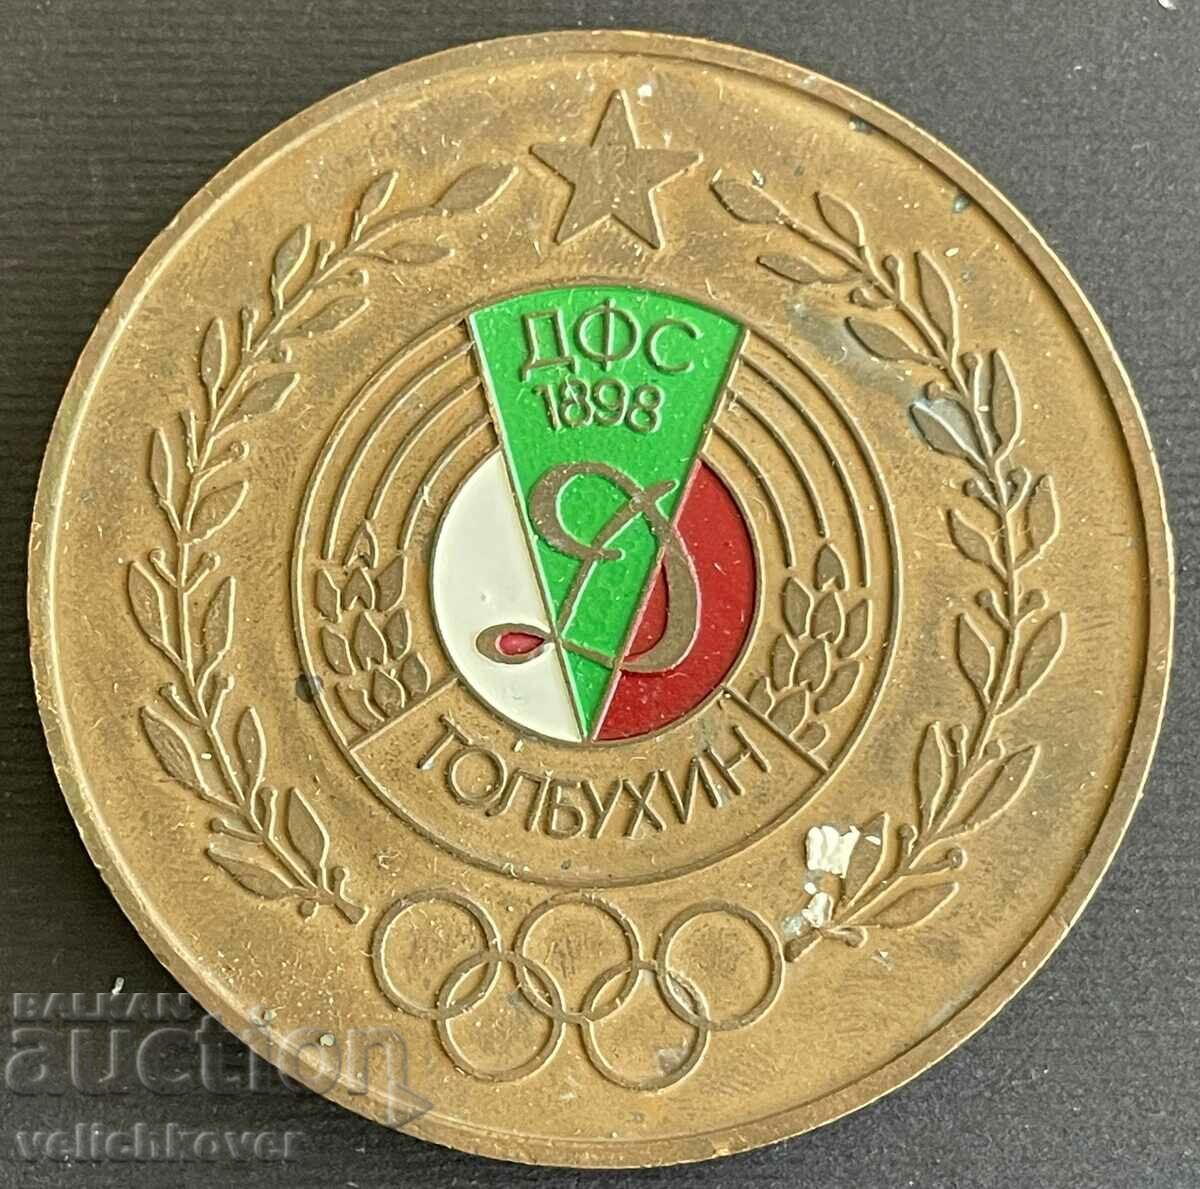 35358 Bulgaria plaque DFS football club Dobrudja Tolbukhin